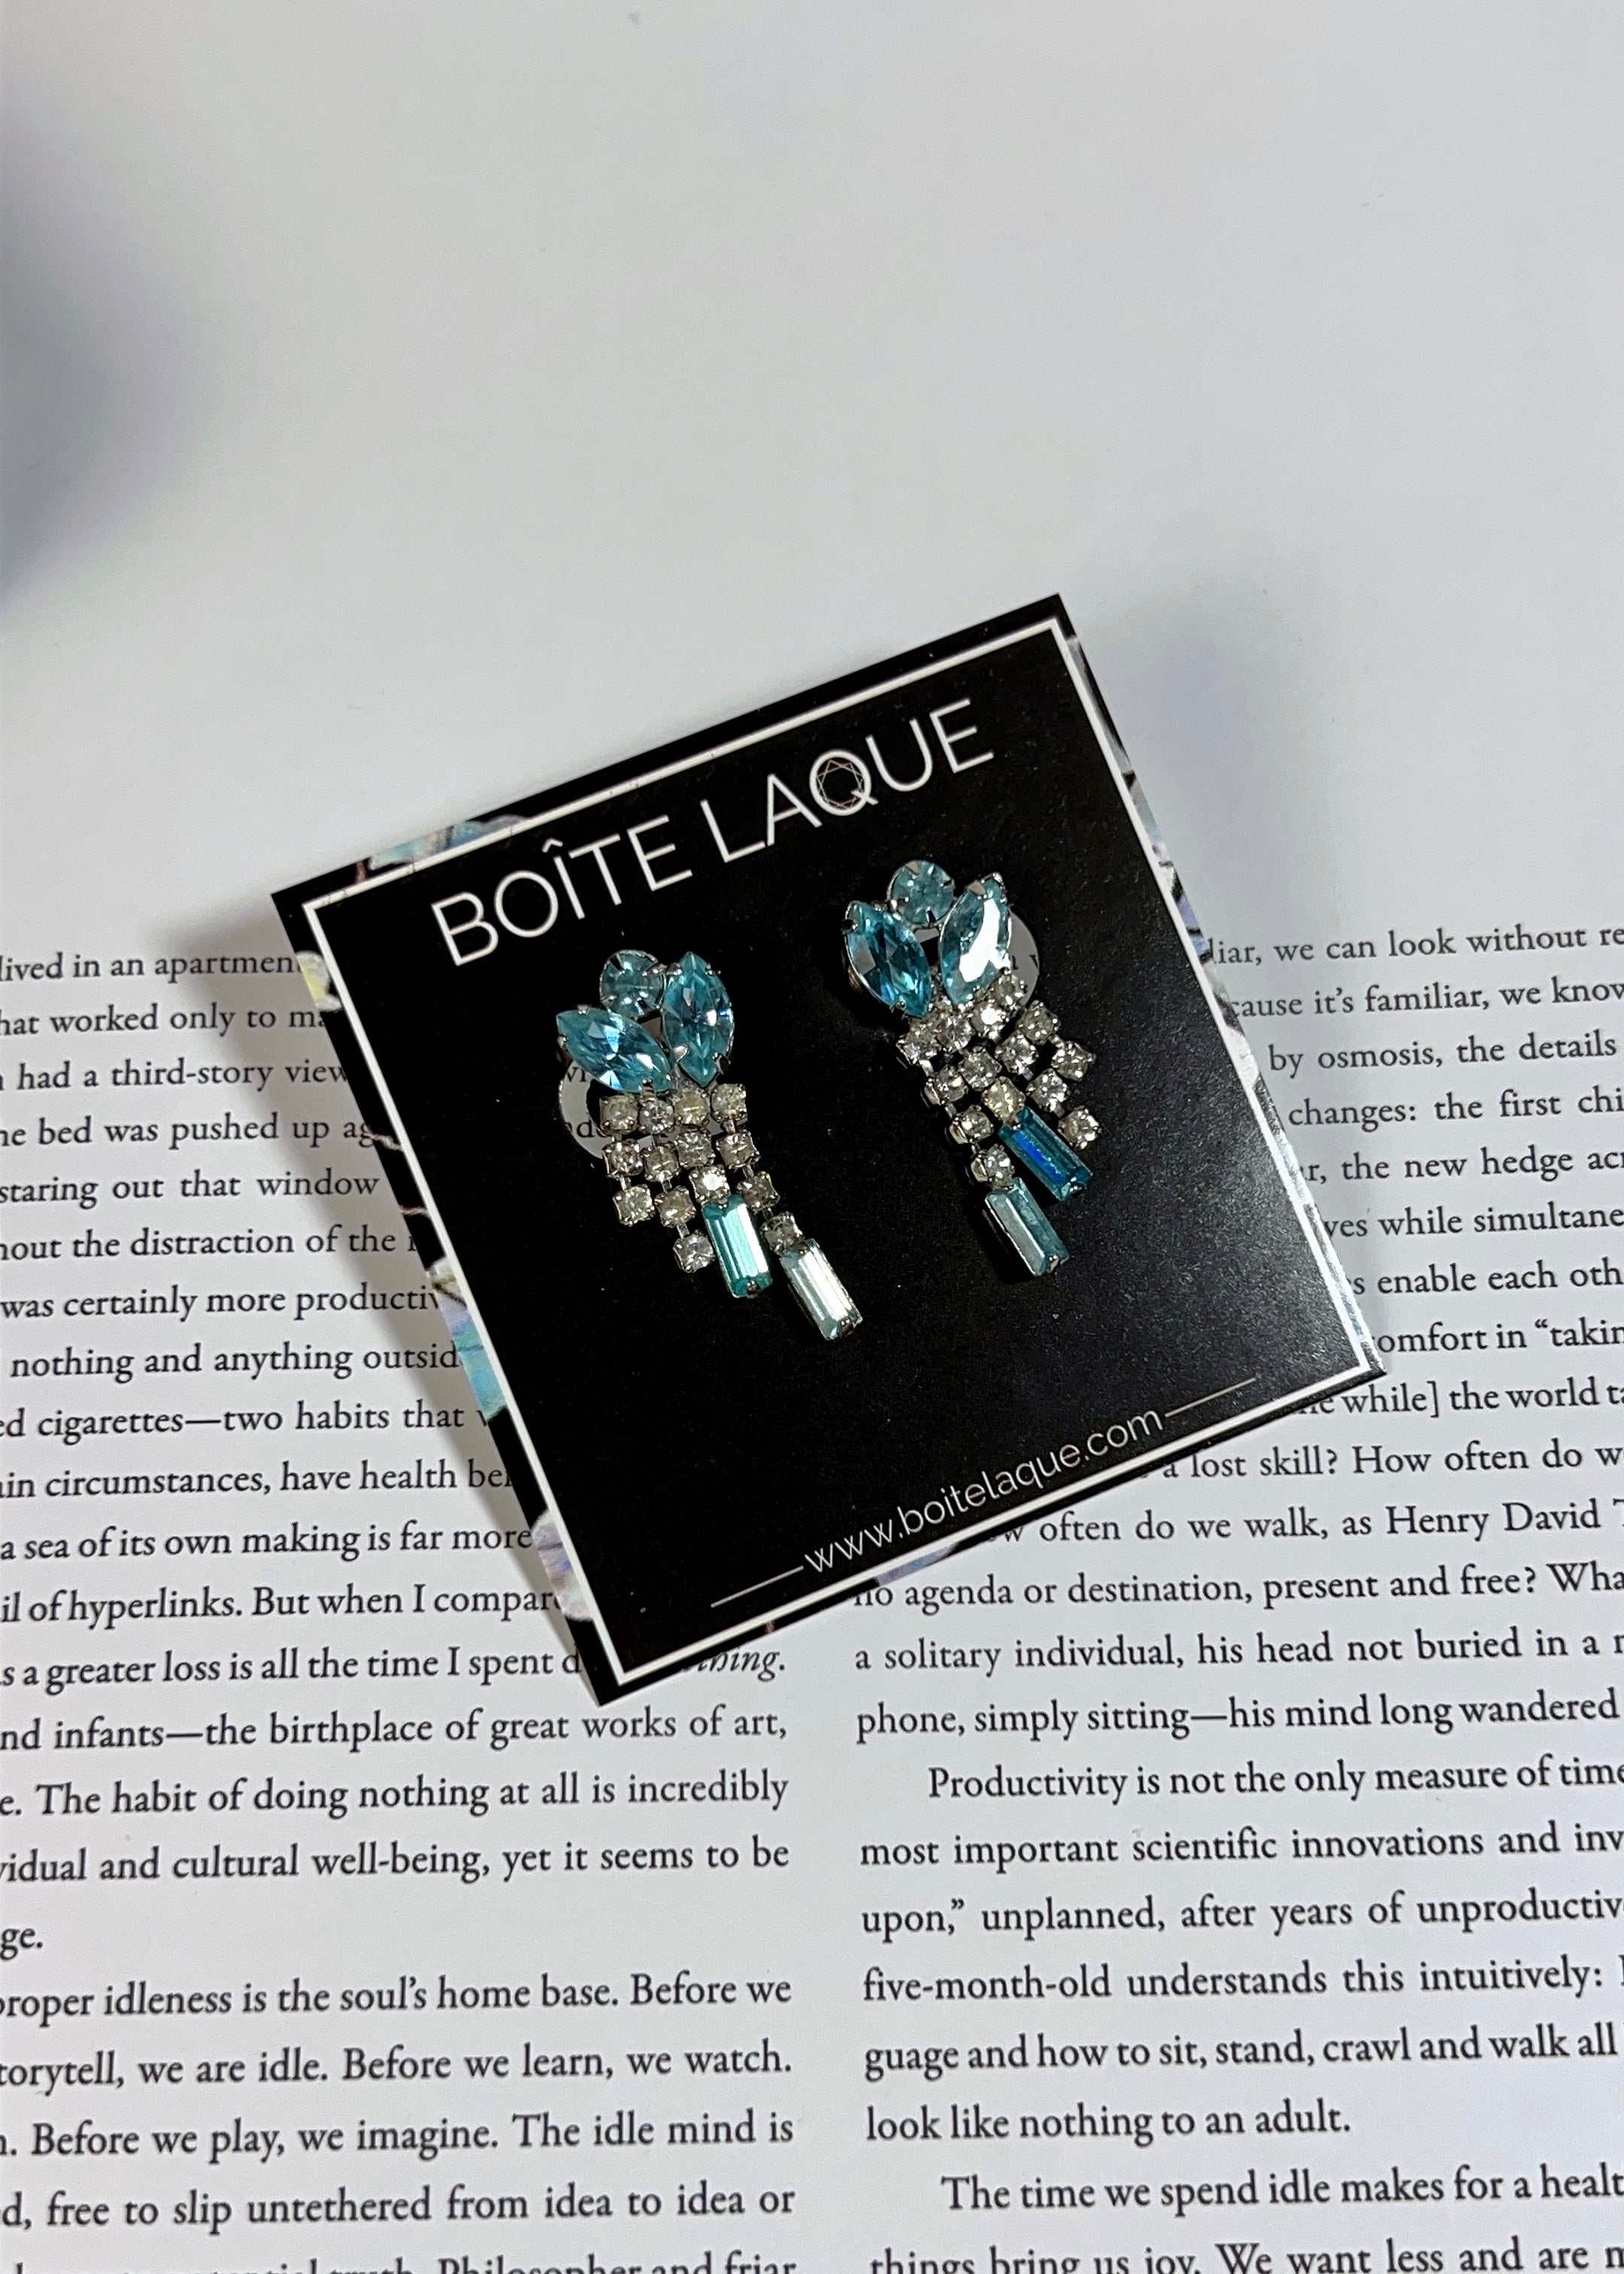 Vintage 60s Blue Rhinestone Crystals Fringe Earrings